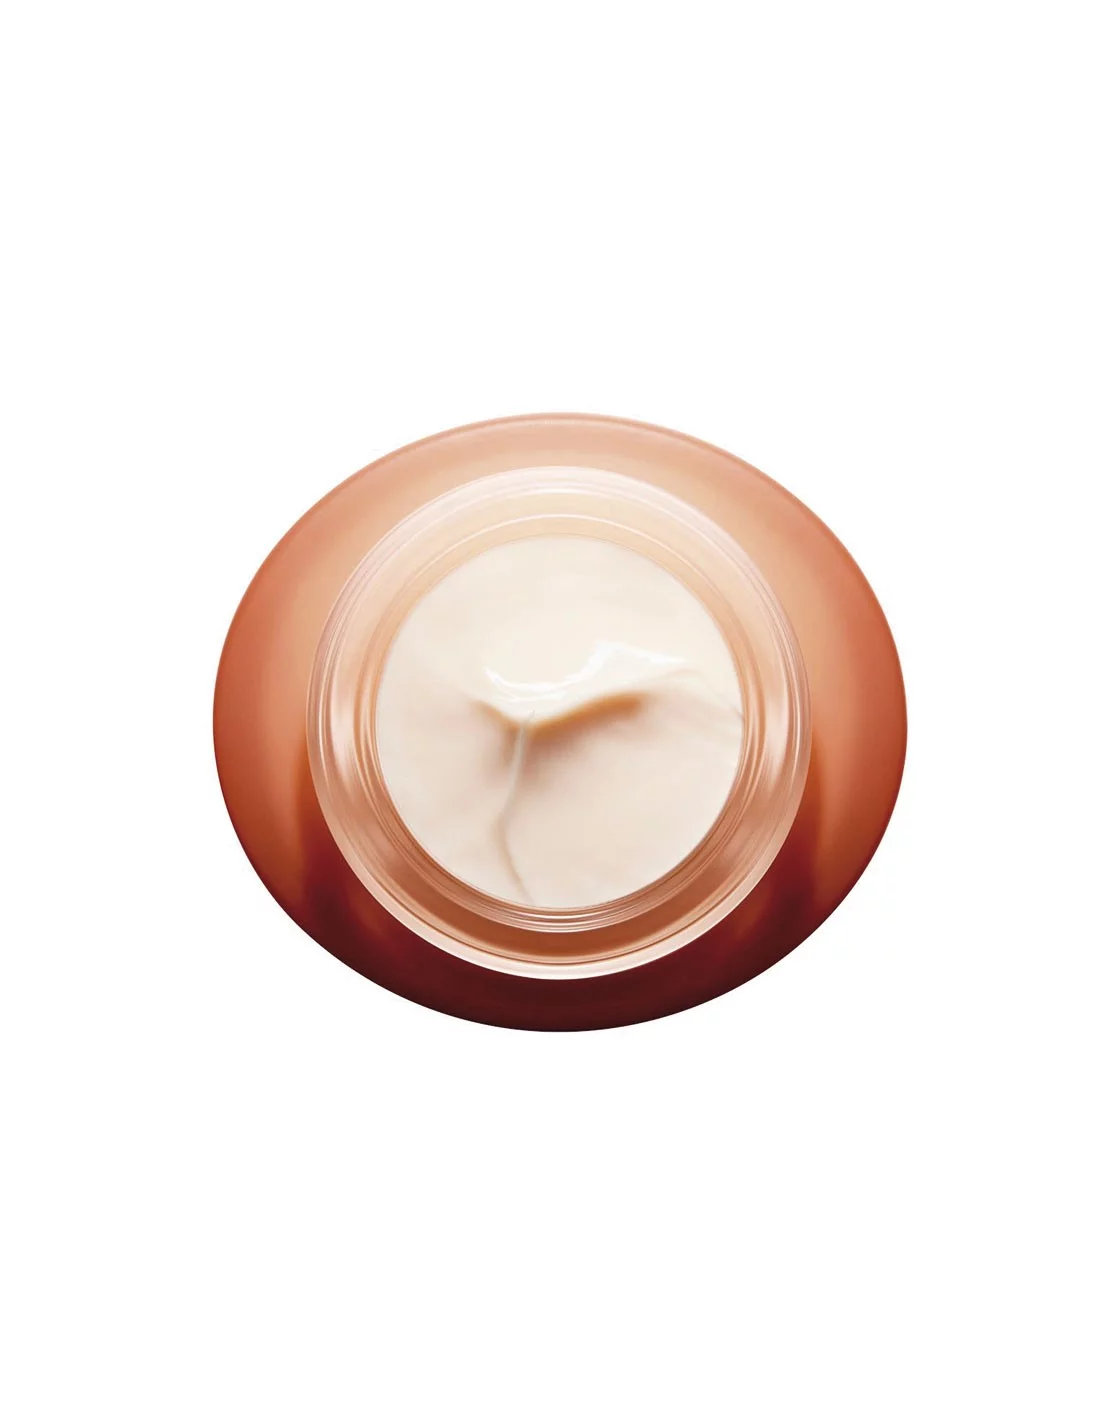 OUTLET – Crema extra firmeza – regenerante noche – 50ml | CLARINS